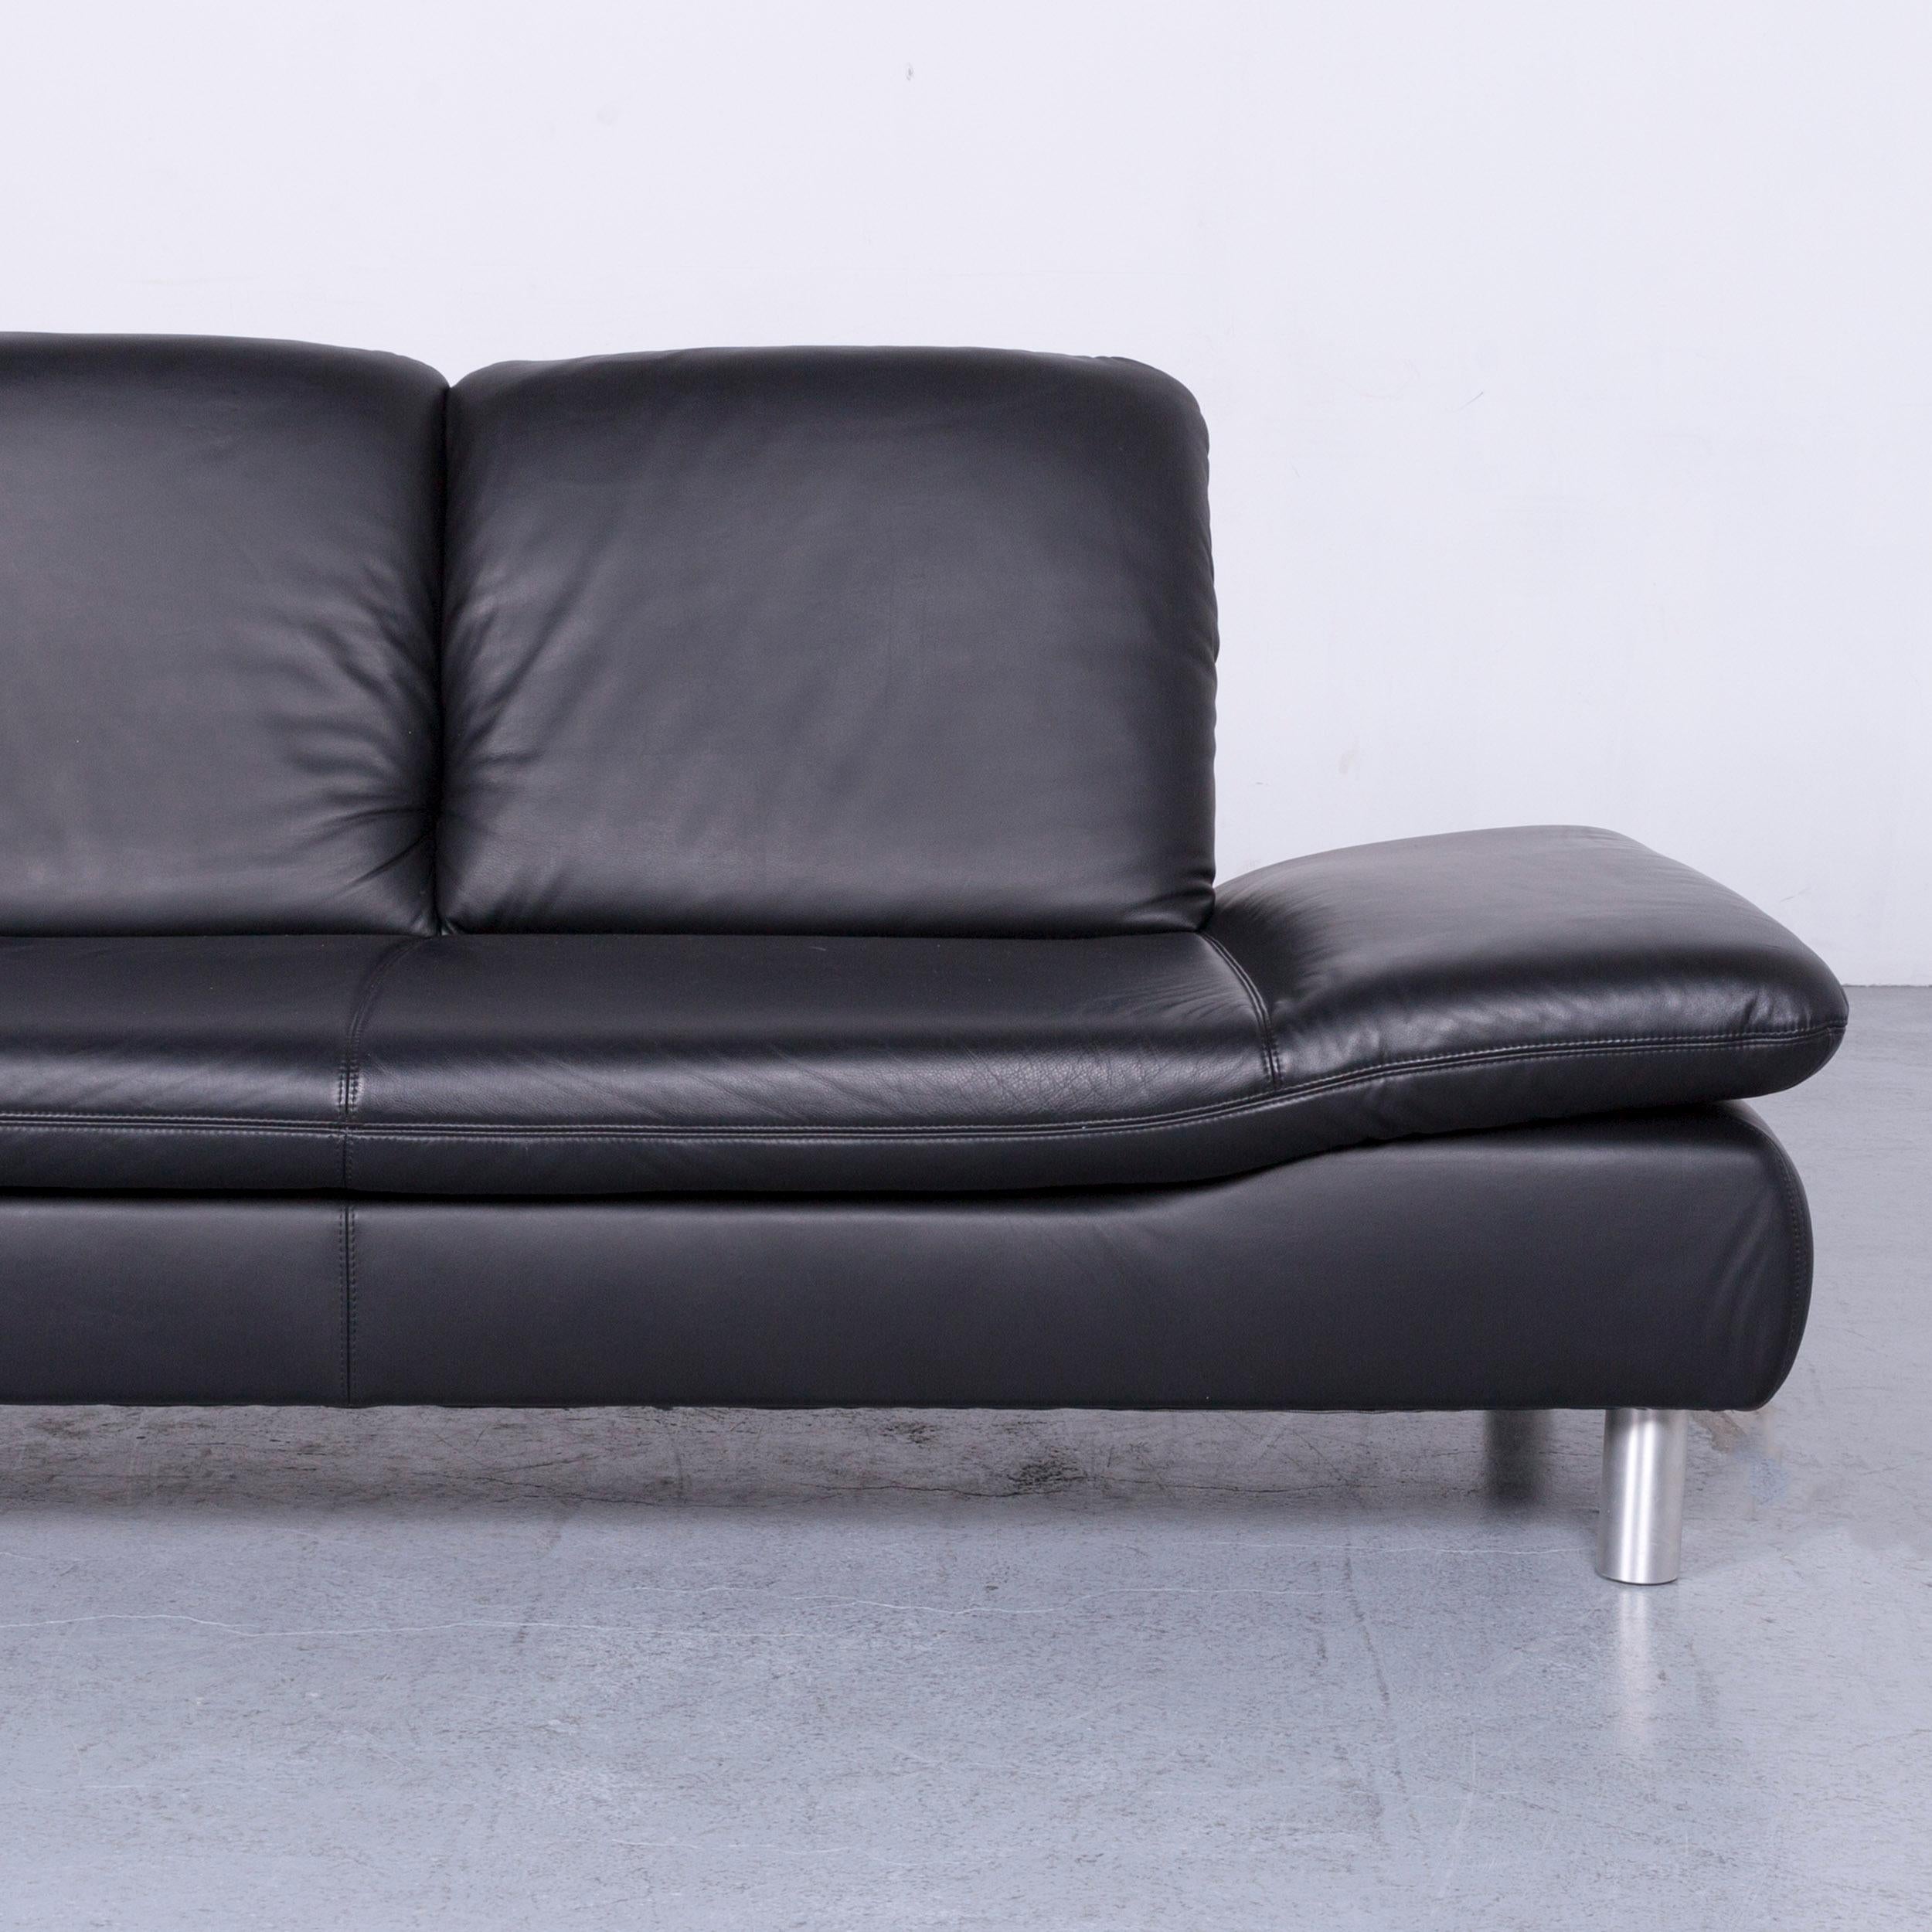 Contemporary Koinor Rivoli Designer Leather Three-Seat Sofa in Black with Functions